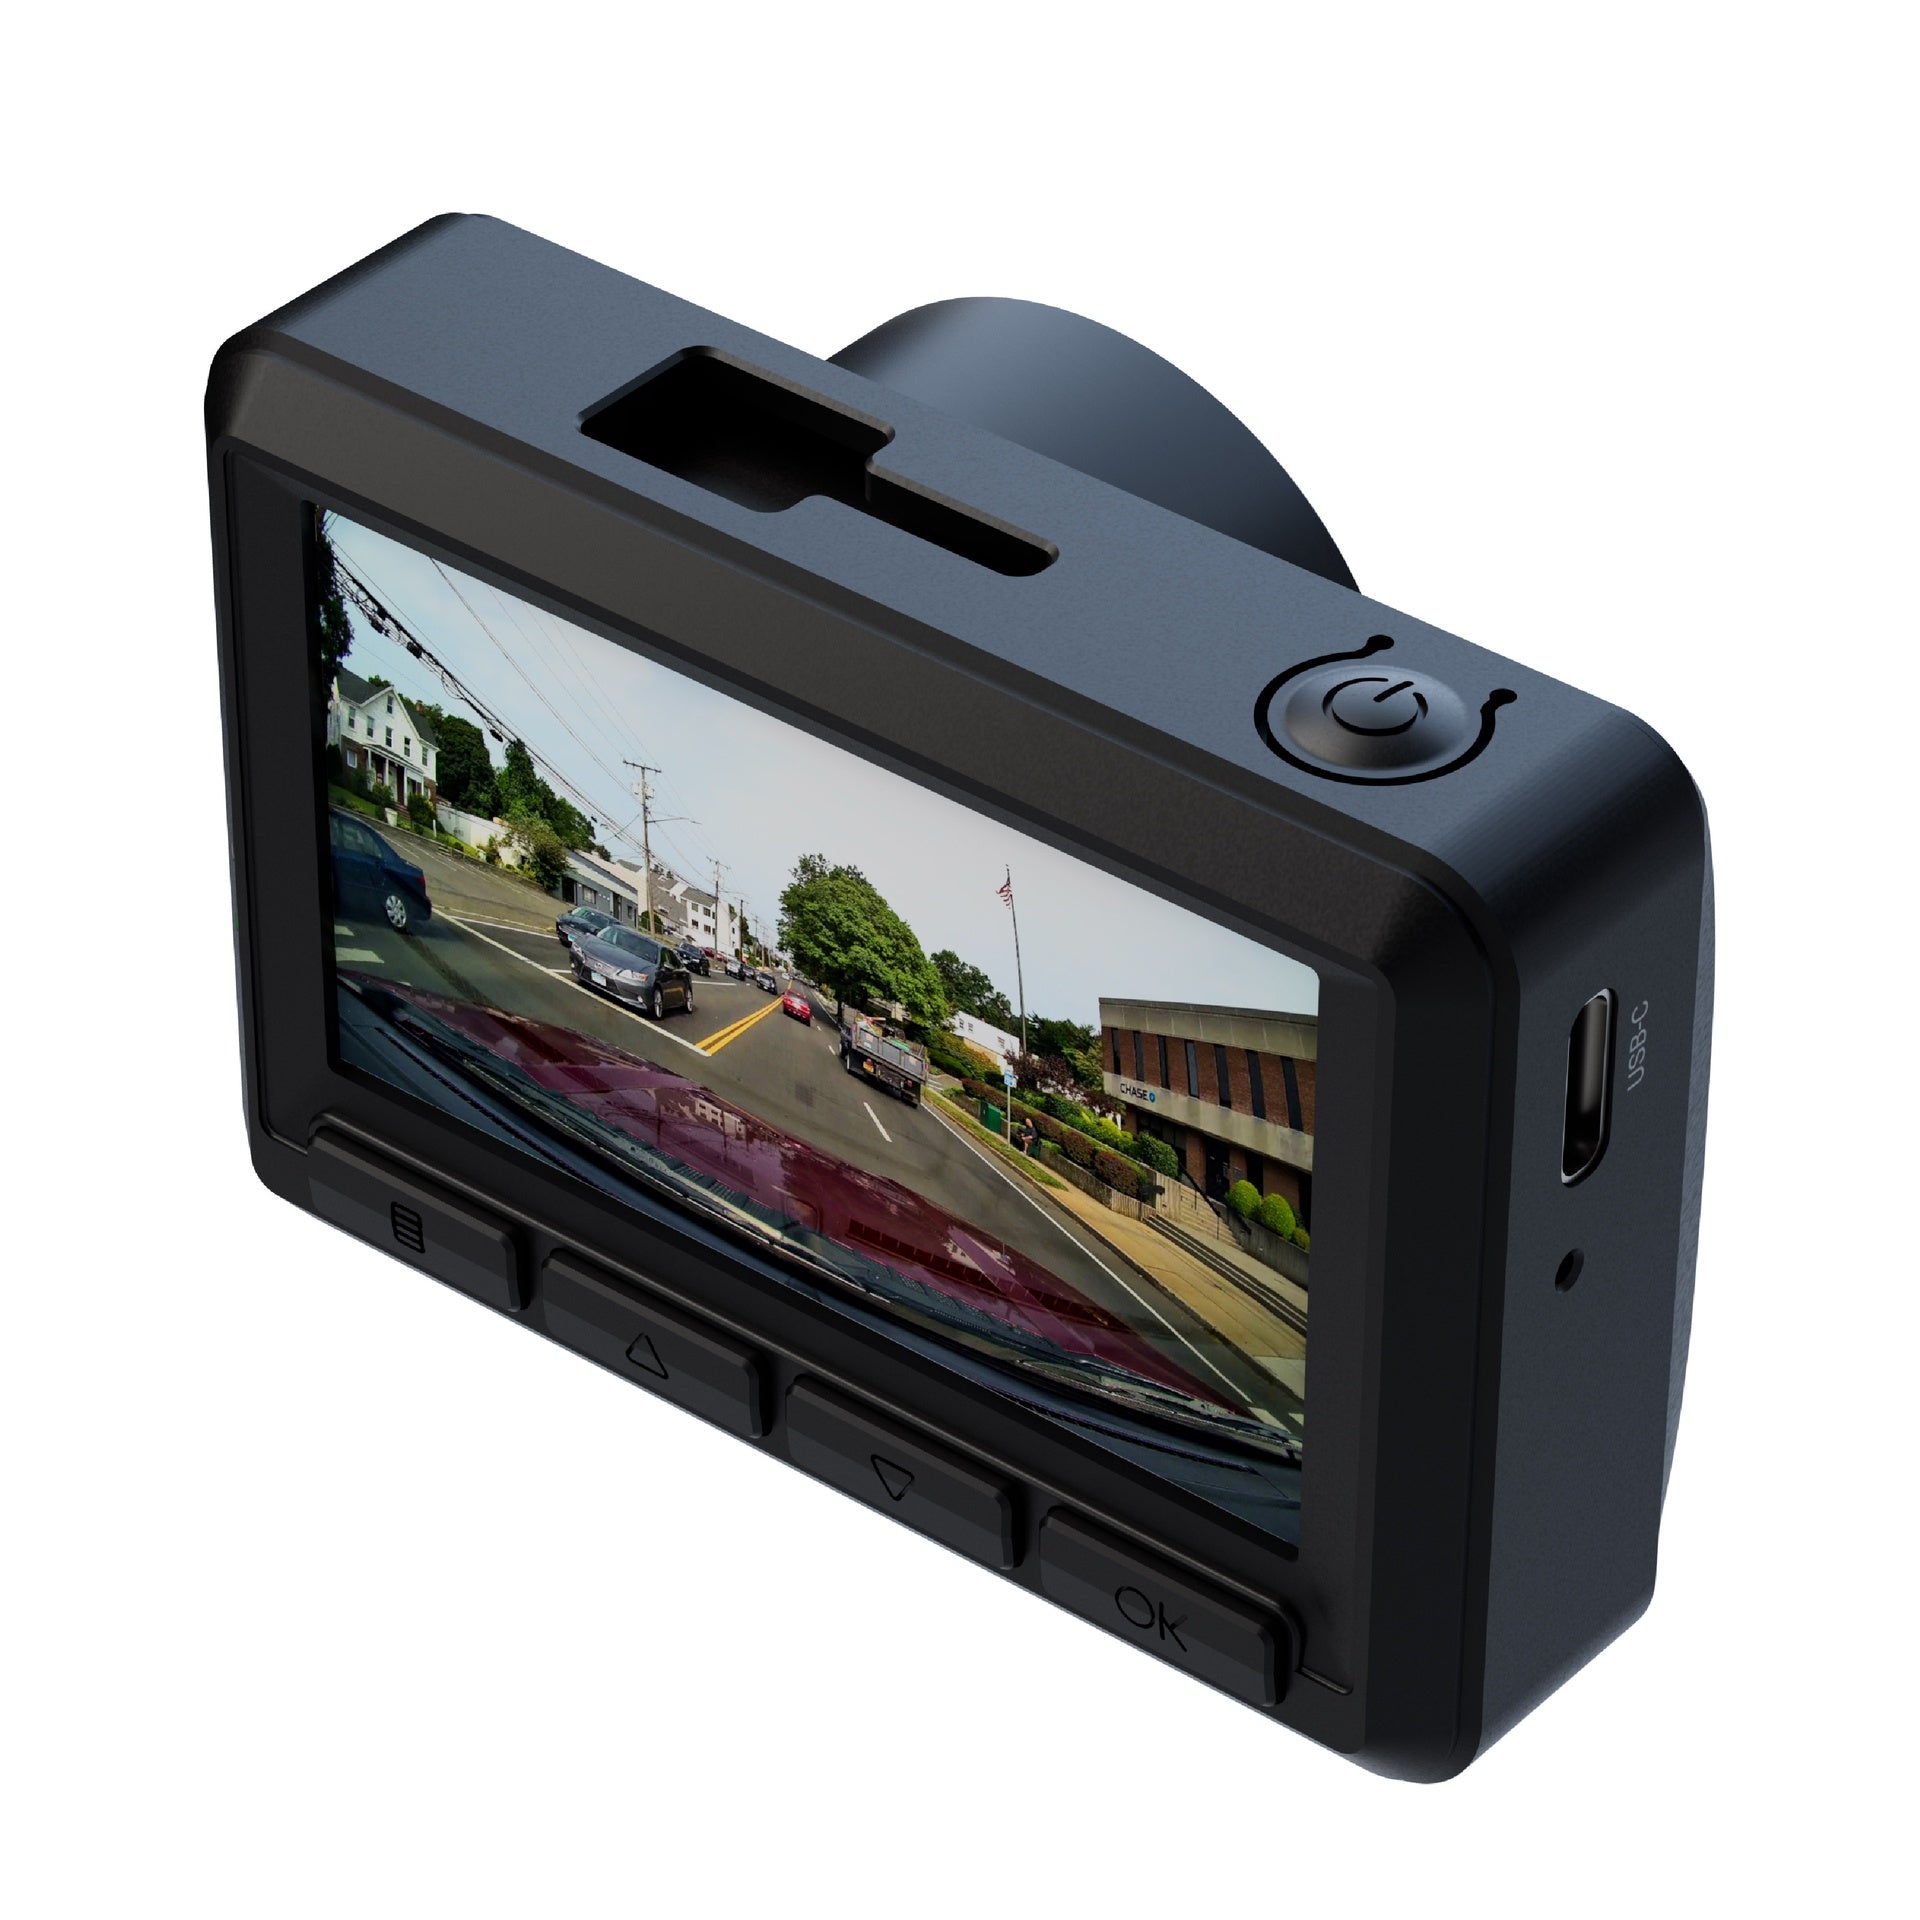 Powerology Dash Camera  Full HD 1080P - Black